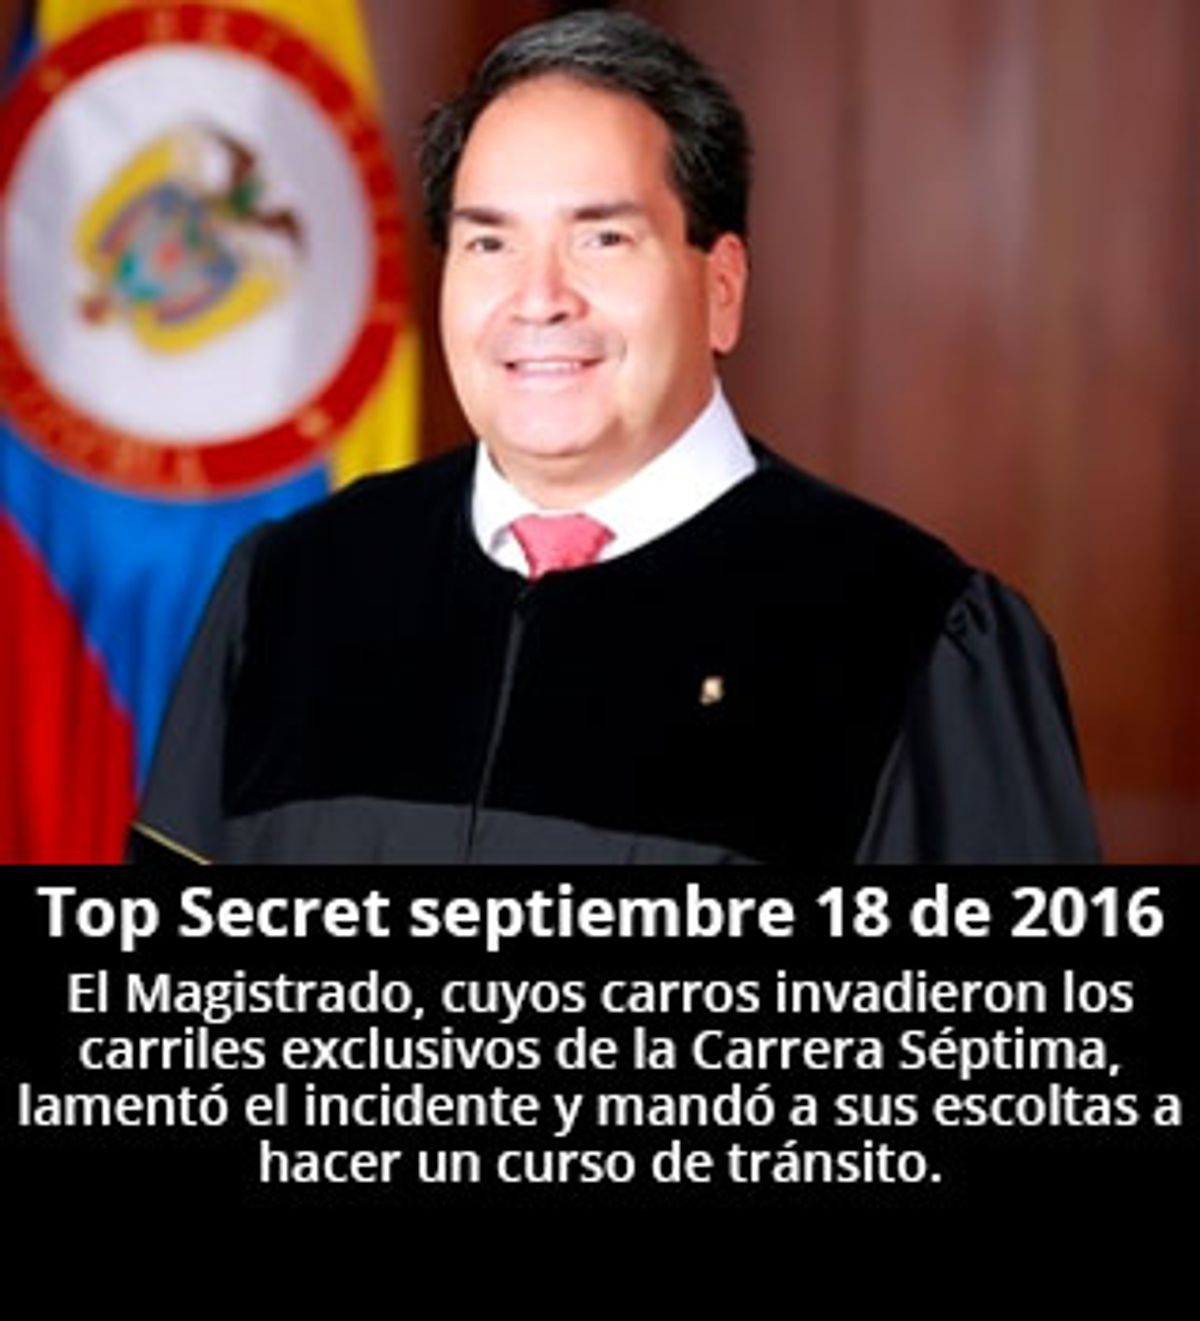 Top Secret septiembre 18 de 2016